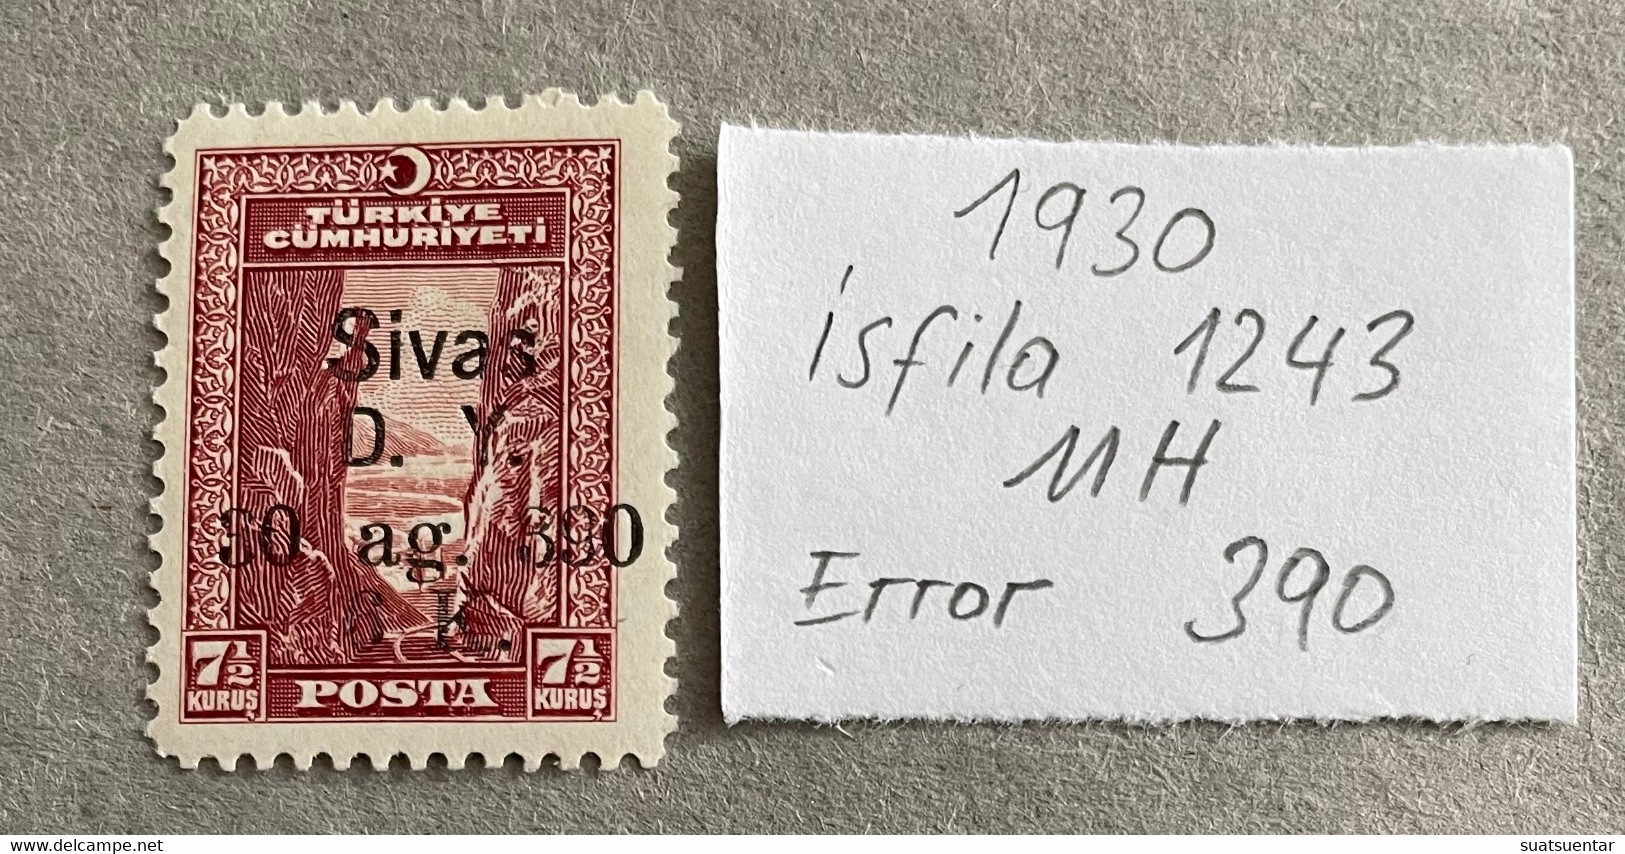 1930 Sivas-Ankara Railway Stamps Error   390 MH Isfila 1243 - Unused Stamps